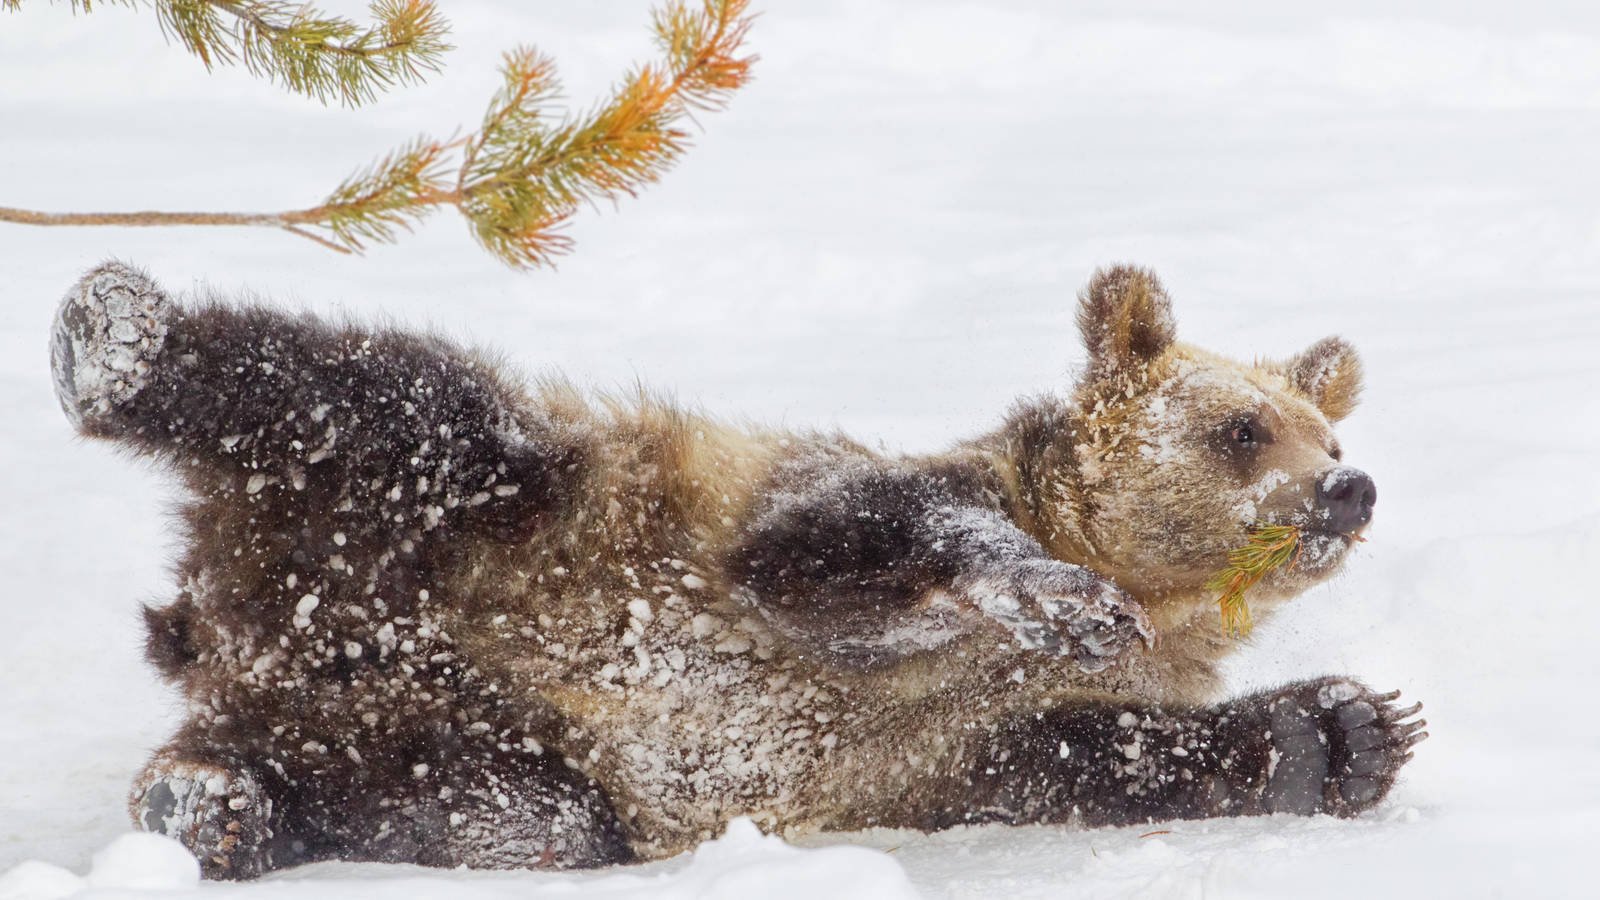 Медведь в сугробе. Медведь зимой. Медведь зимой в лесу. Медвежонок зимой. Бурый медведь зимой.